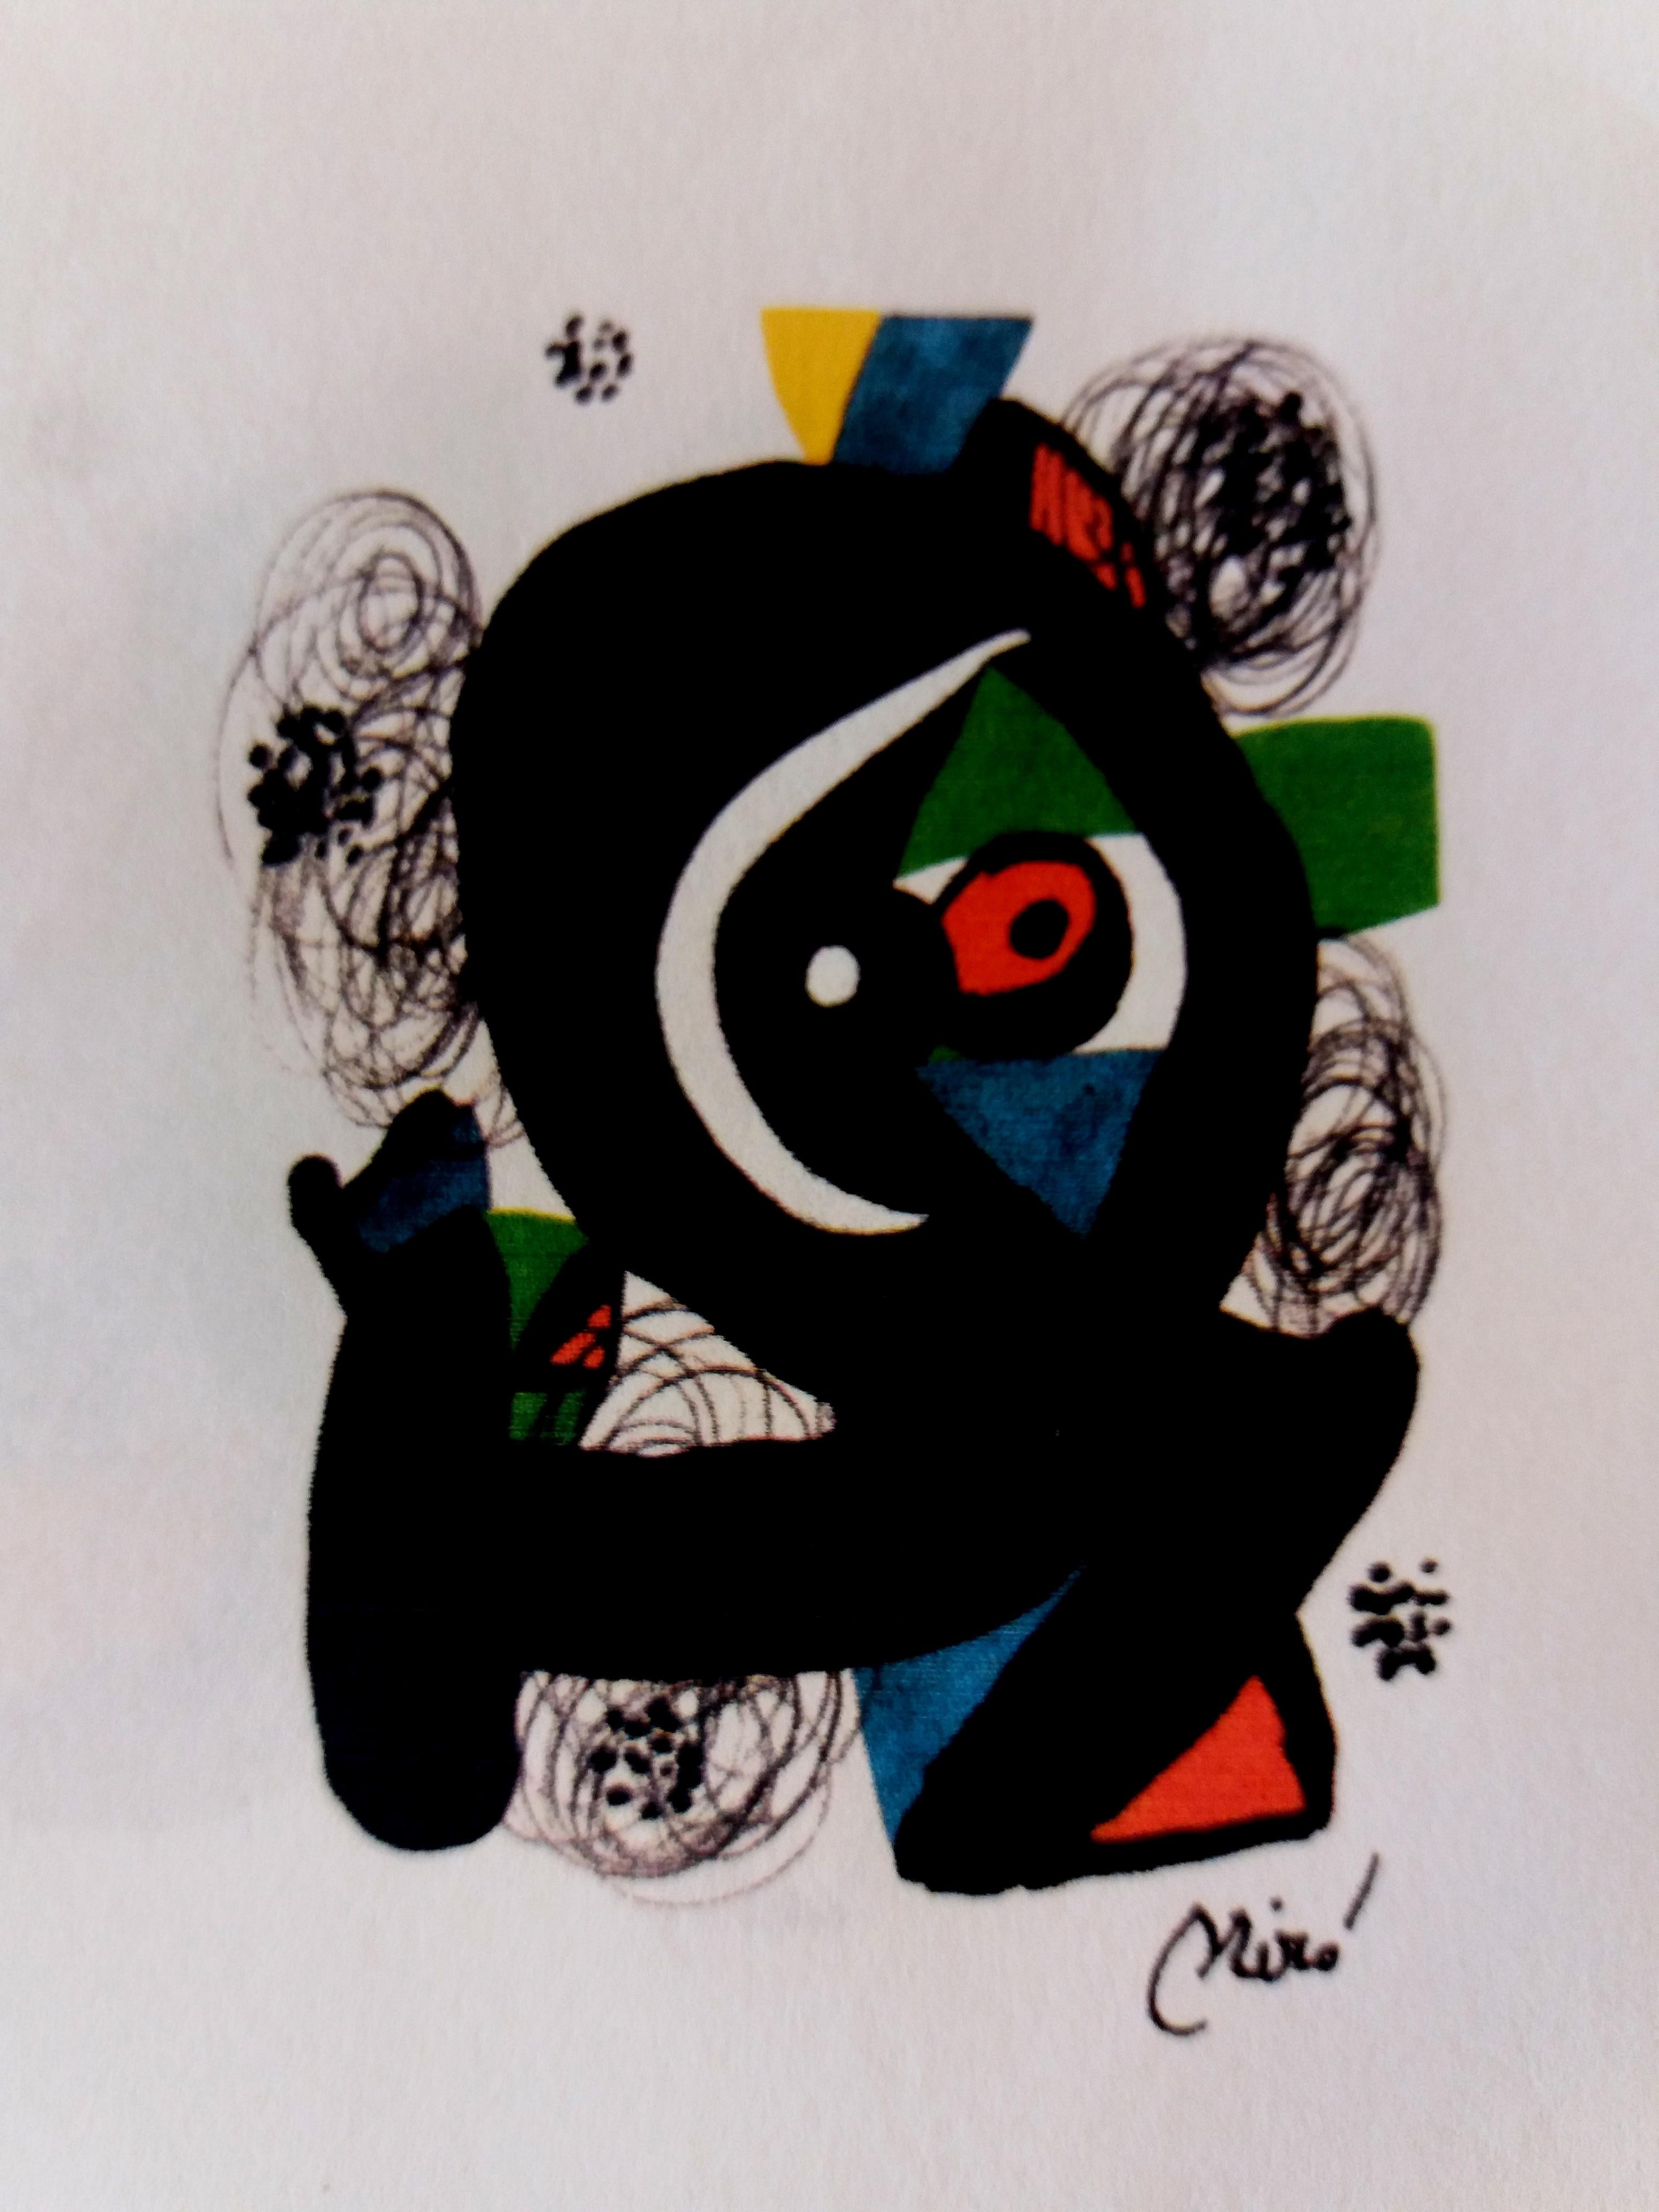 Joan Miró Abstract Print - 2 La Melodie acide original lithograph painting